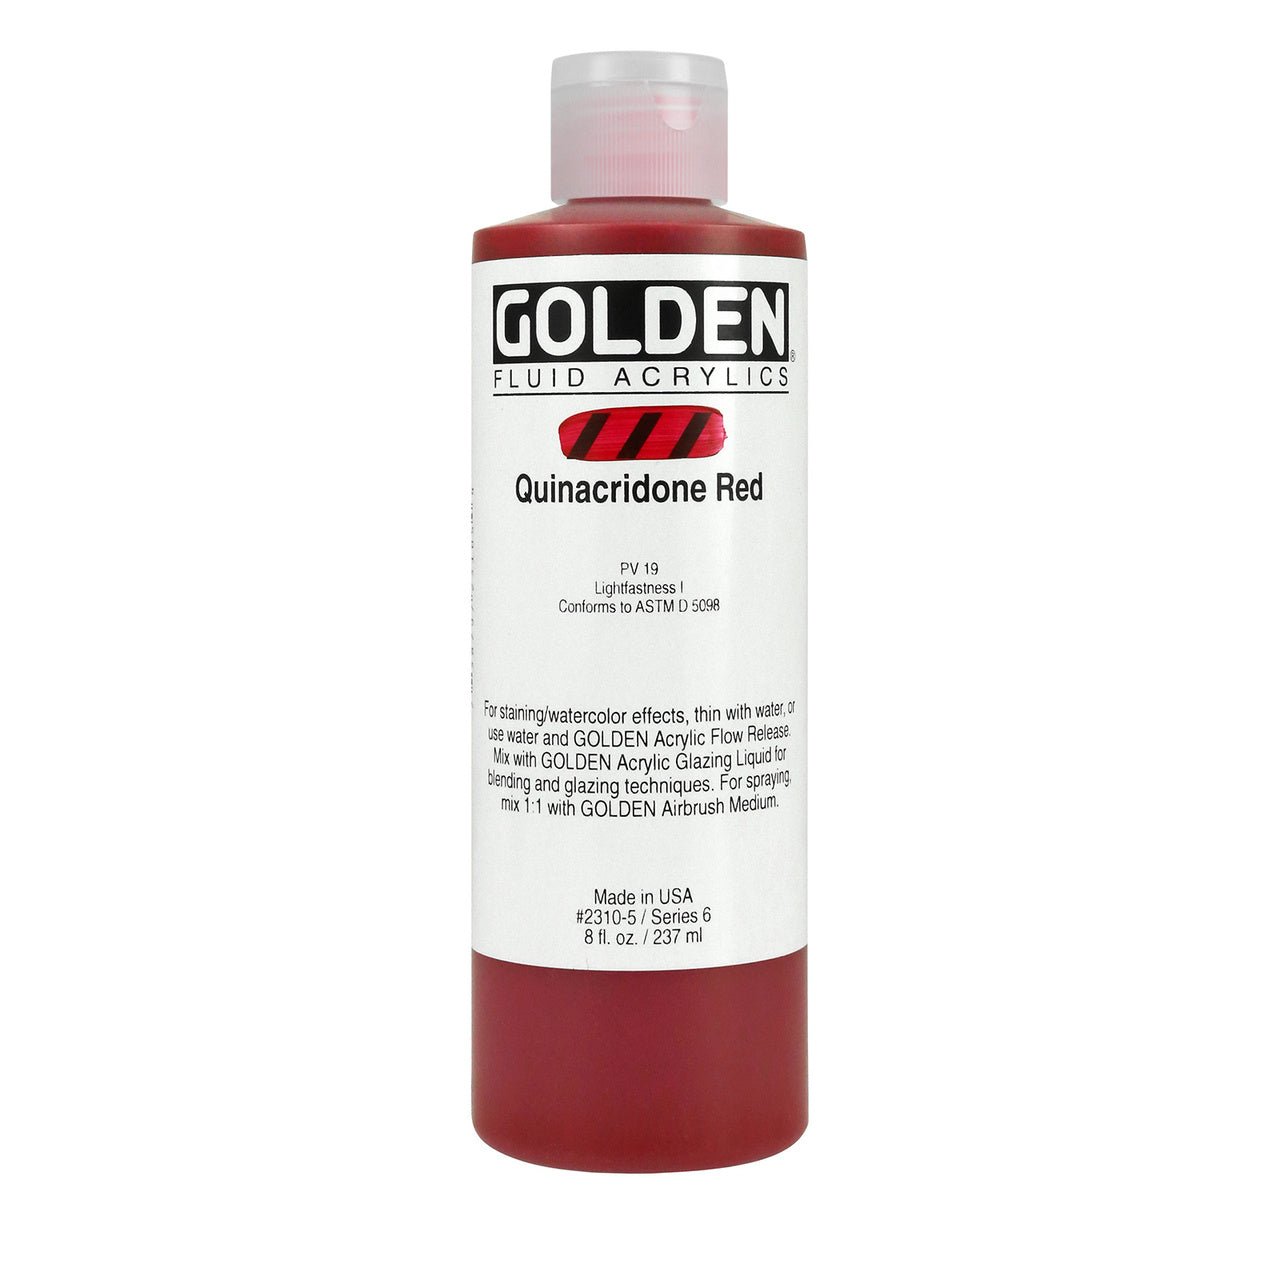 Golden Fluid Acrylic Quinacridone Red 8 oz - merriartist.com